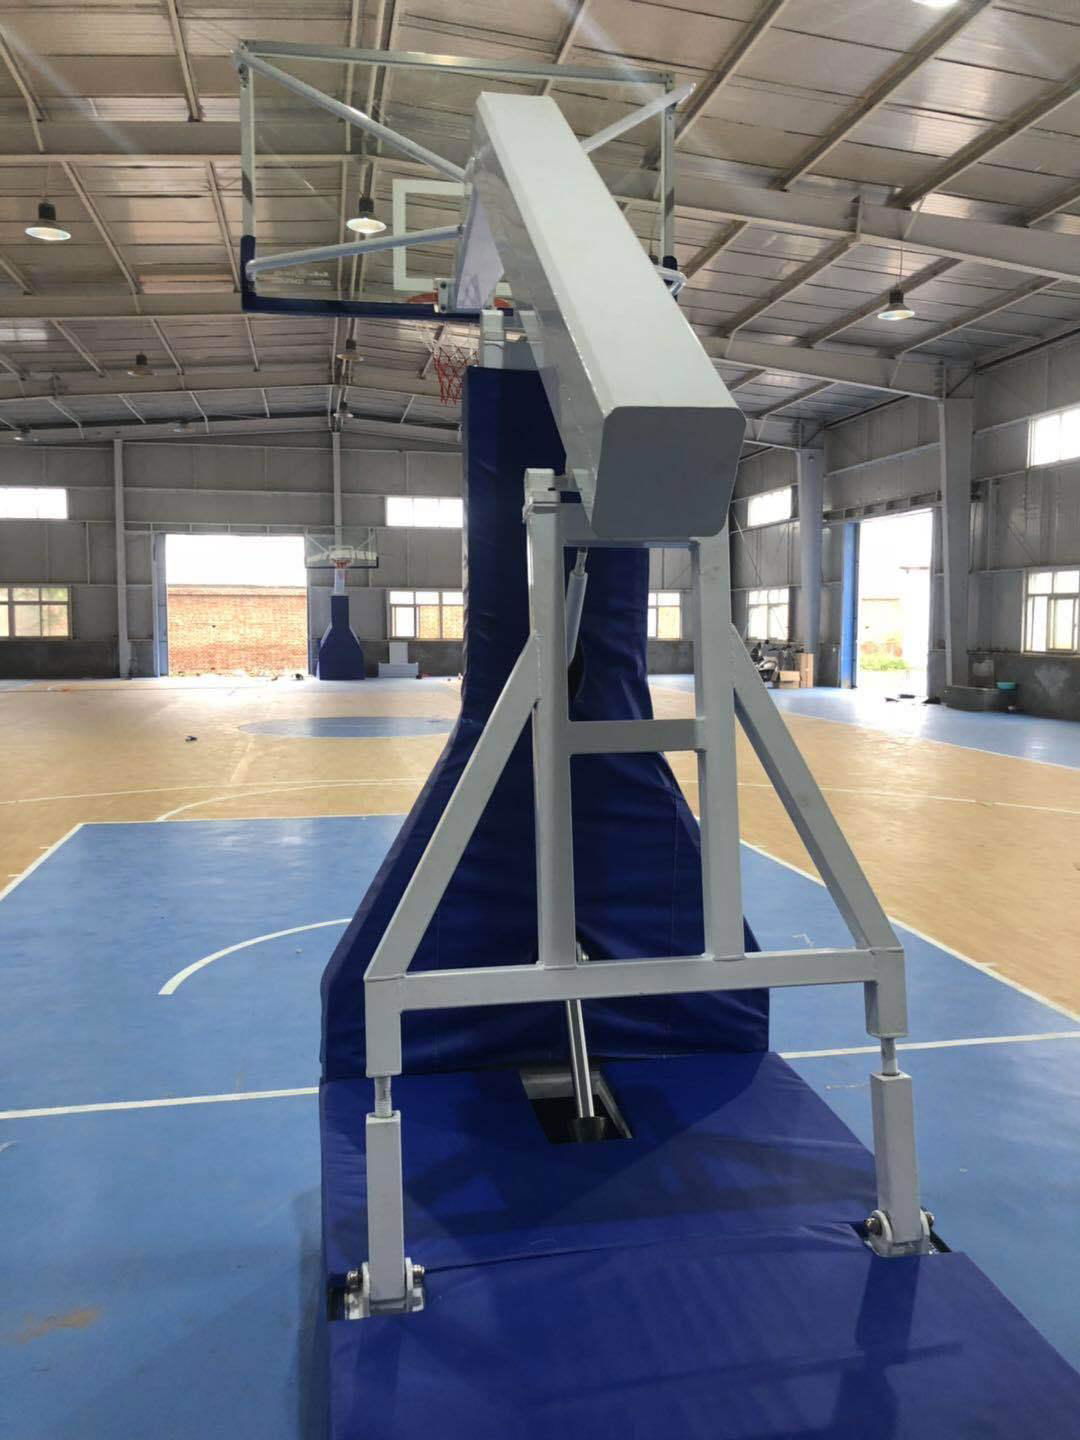 Electronic hydraulic basketball stand 2